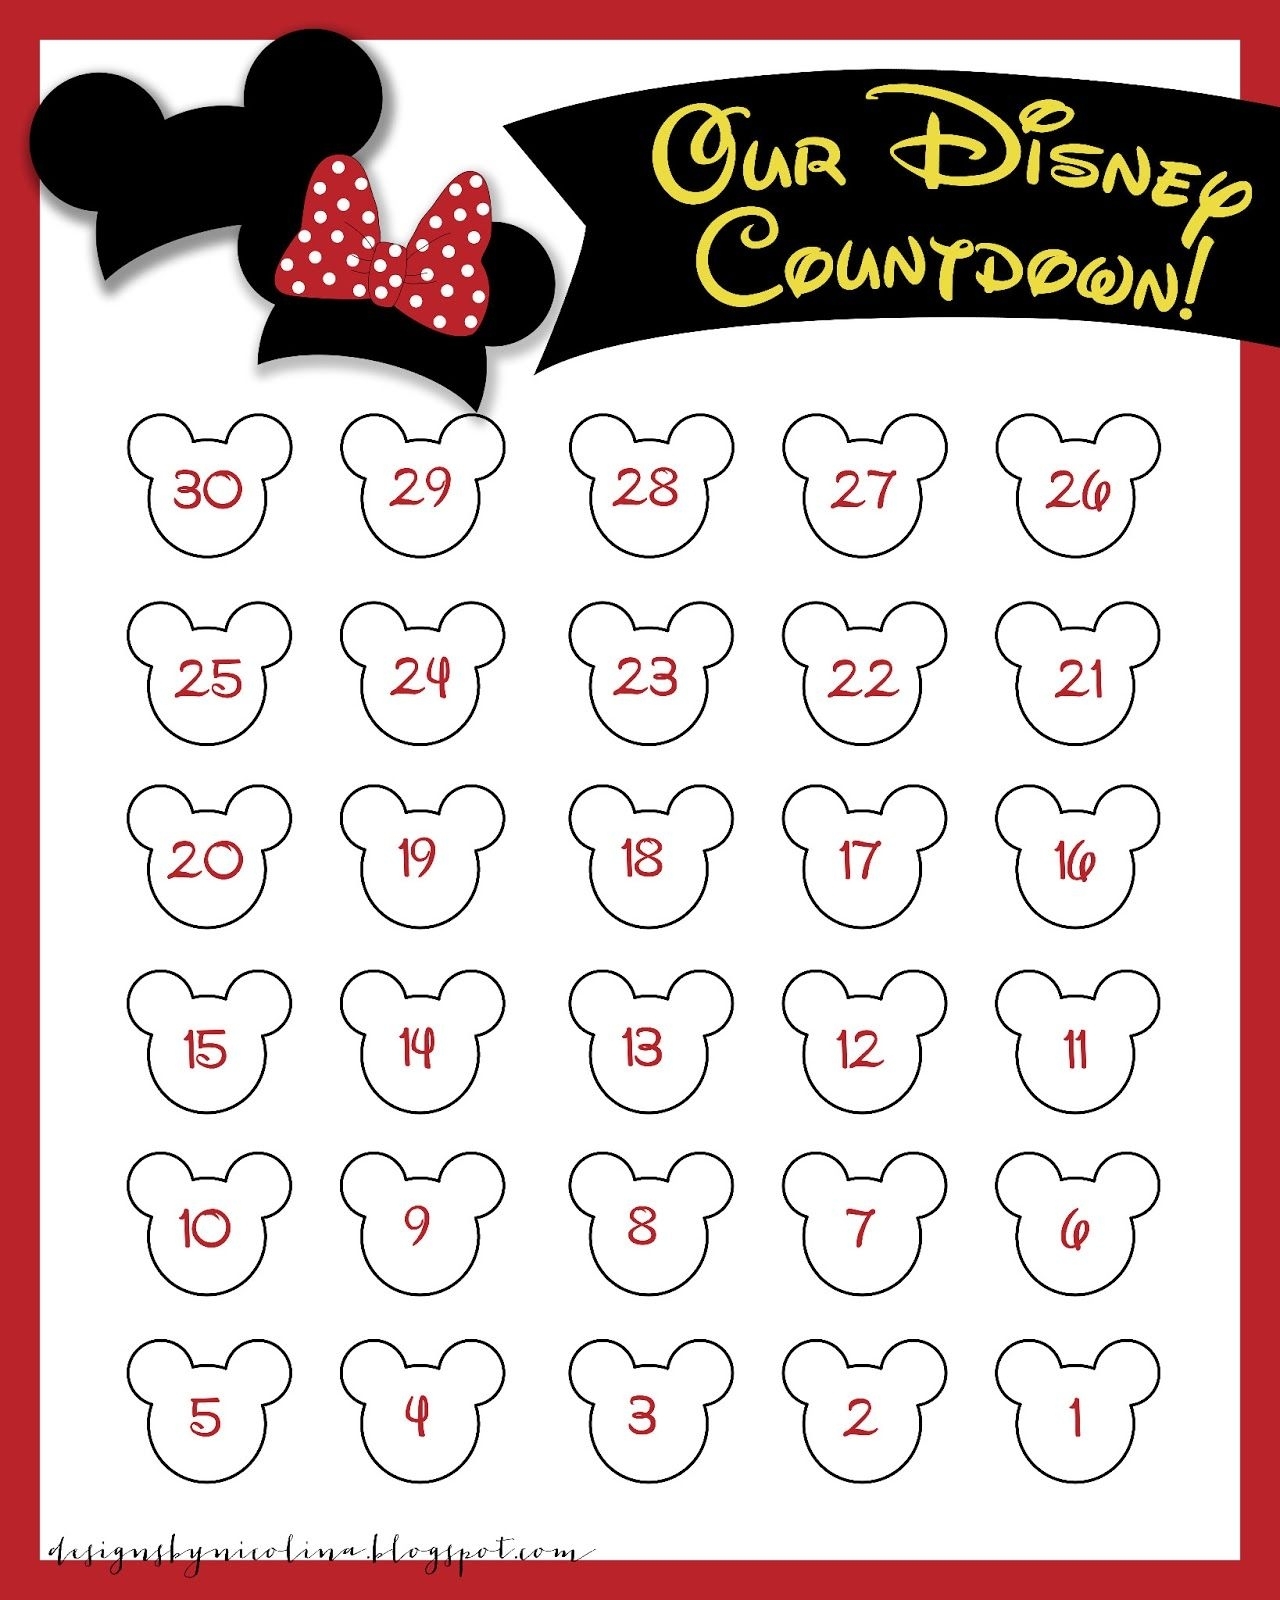 Disneyland Countdown Calendar | Designsnicolina: Disney for Disney Cruise Countdown Calendar Printable